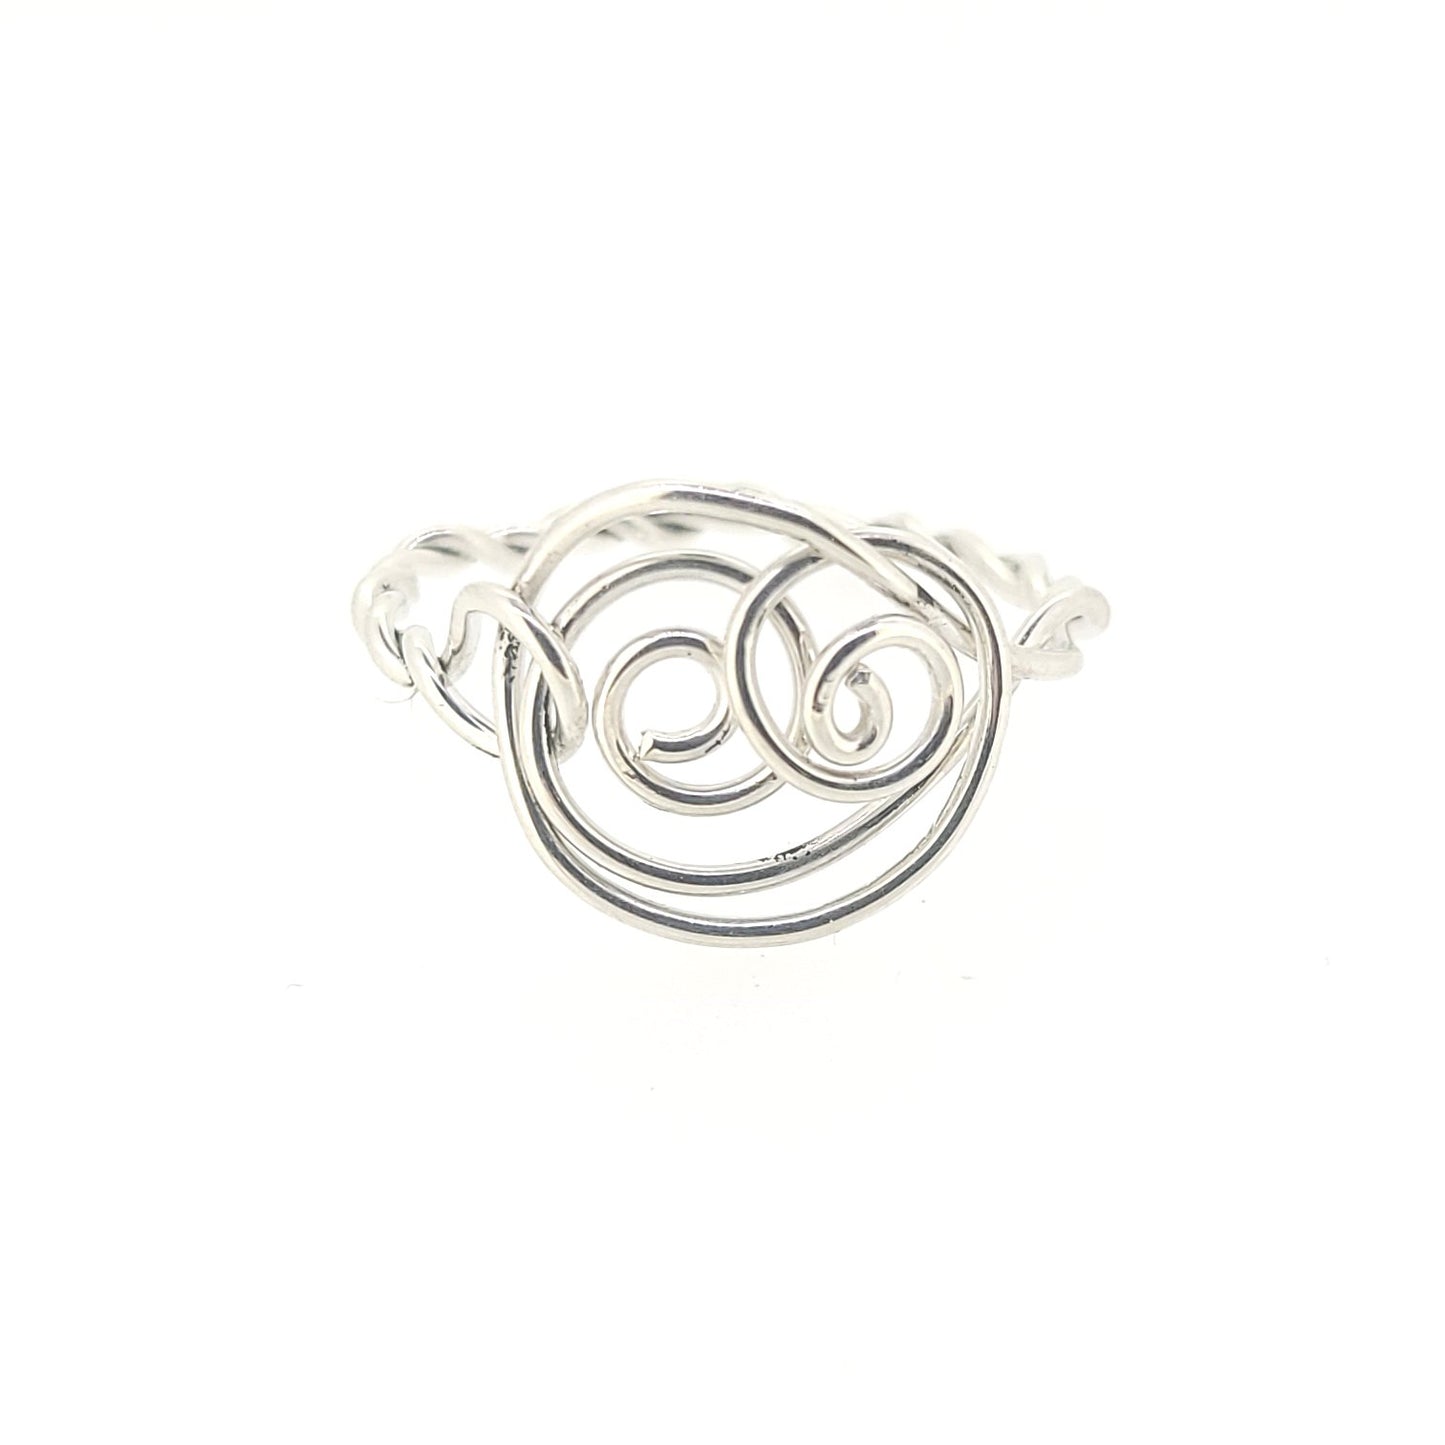 Handmade Spiral Design Ring